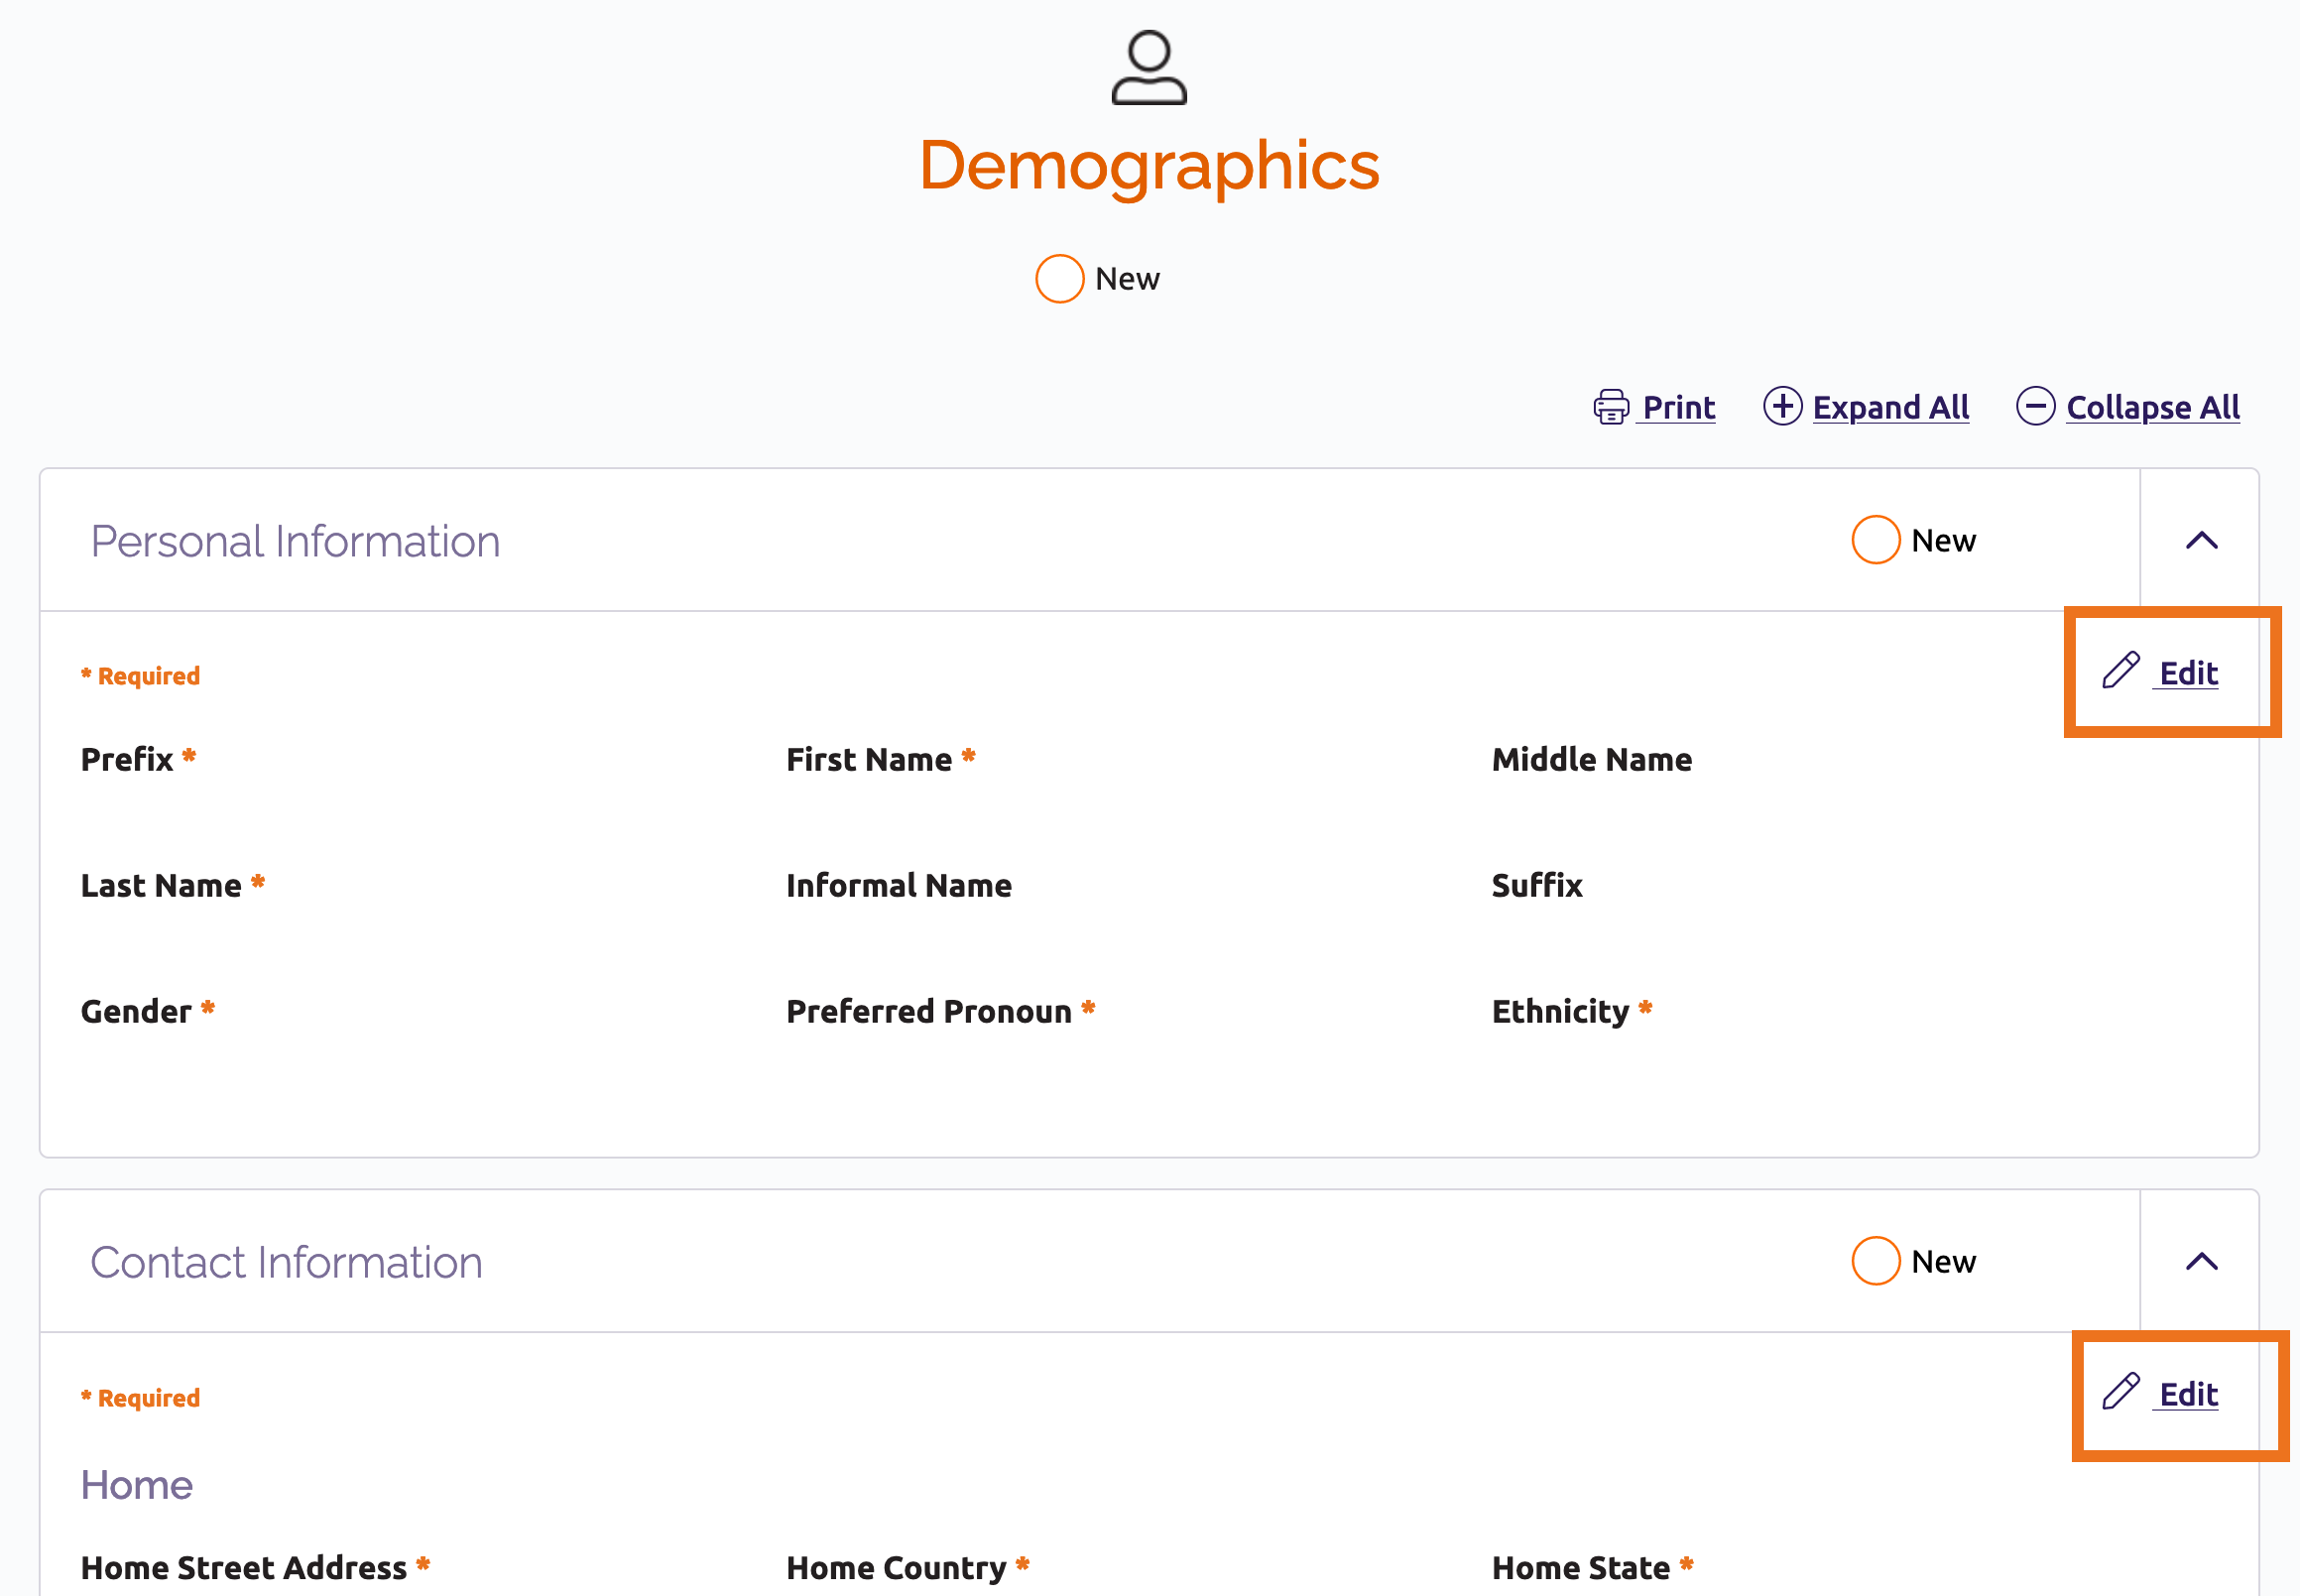 Demographics section page